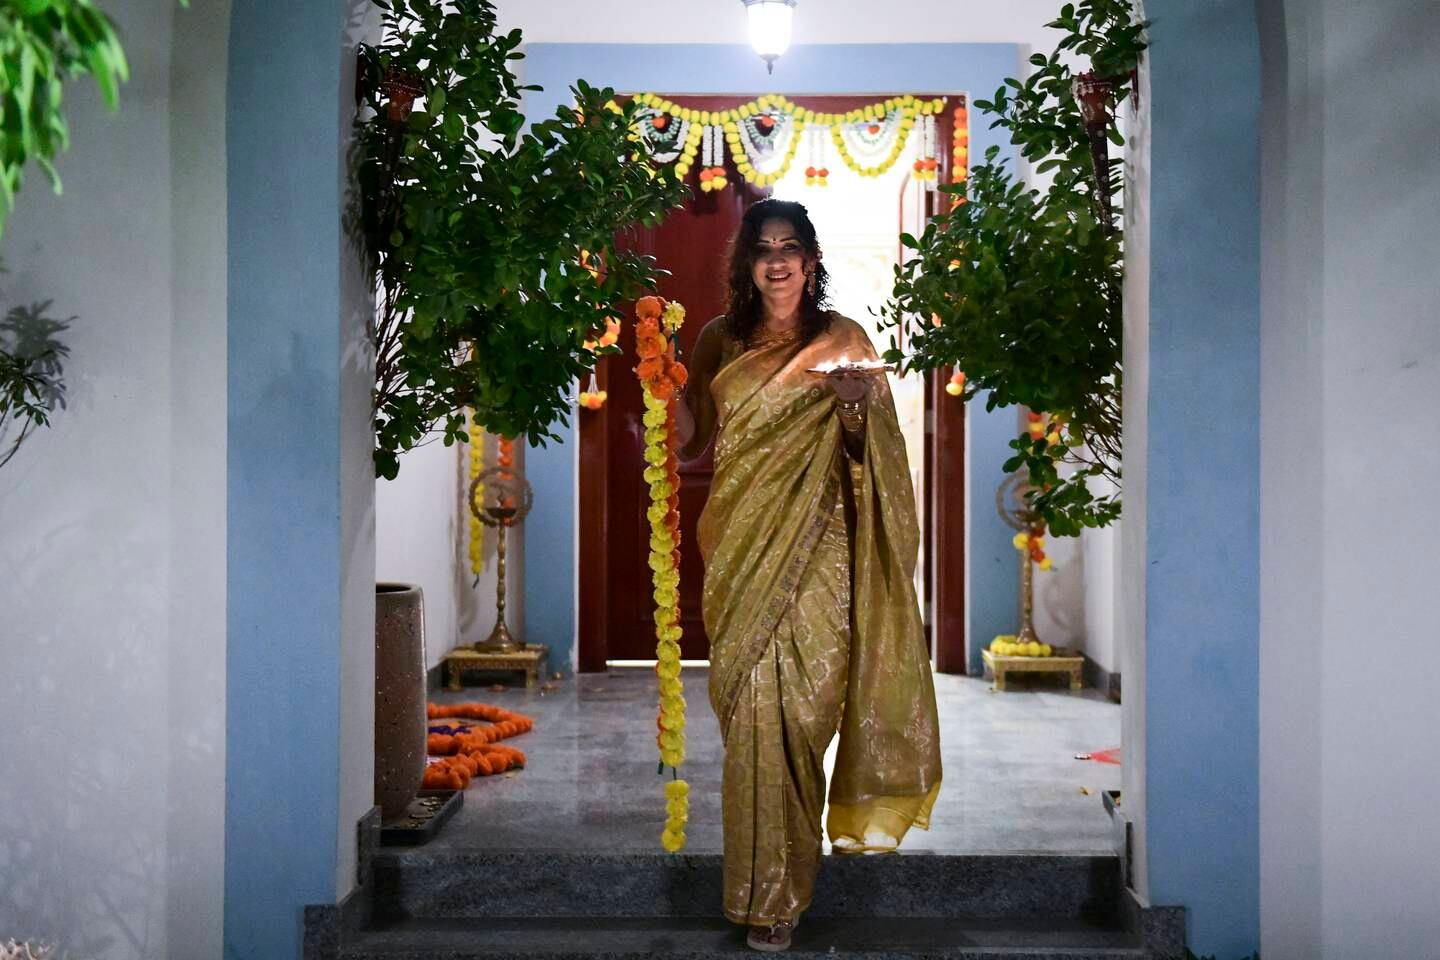 Pragati Grover prepares for the Diwali celebrations at her home in Dubai. Khushnum Bhandari / The National